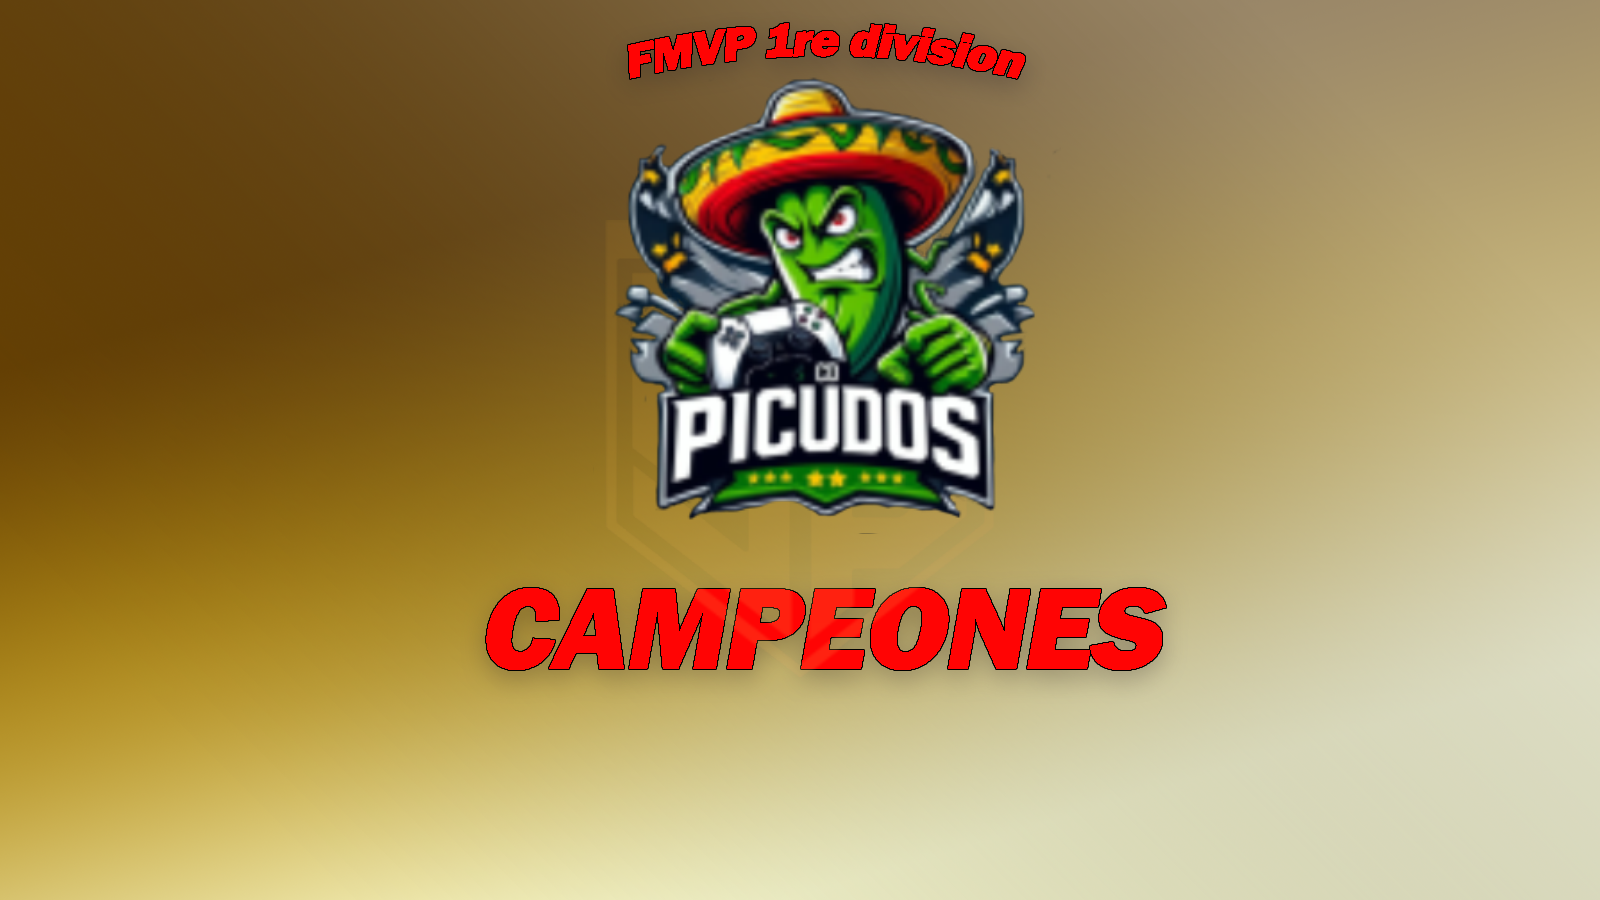 picudos - Picudos Campeones FMVP 1